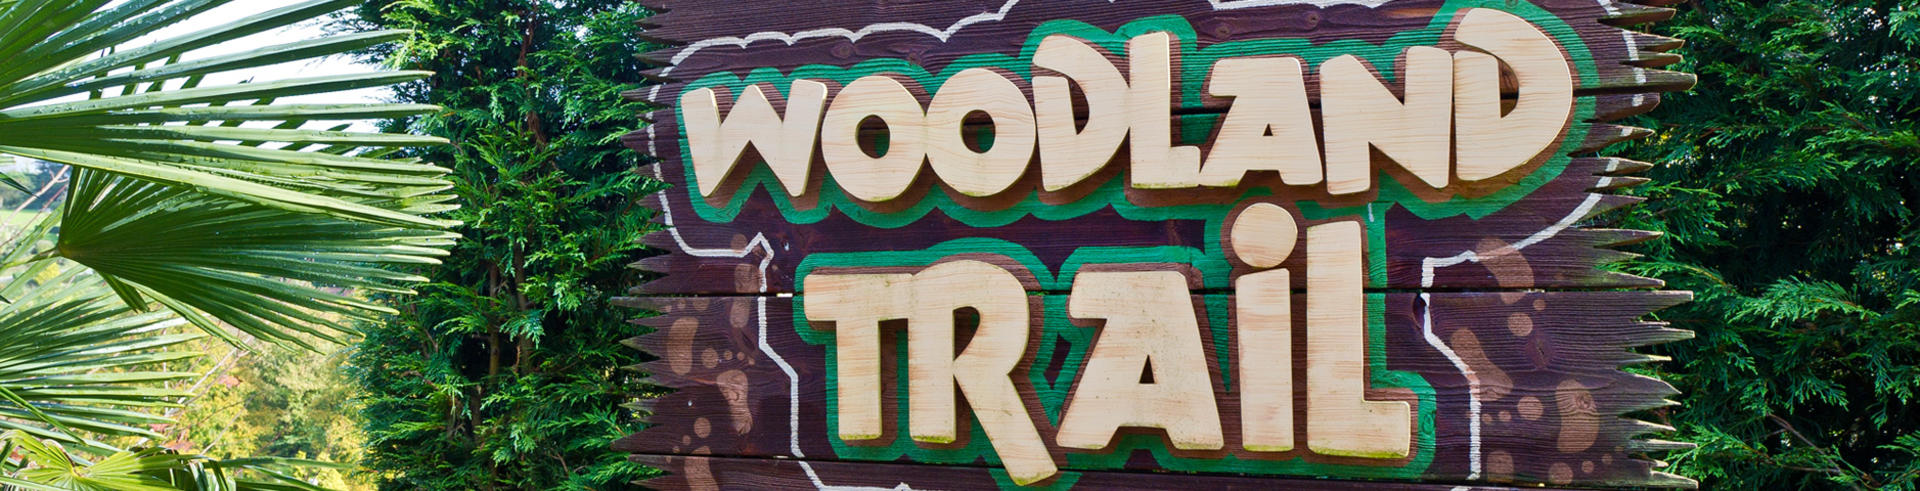 Woodland Trail -  Kents Caven